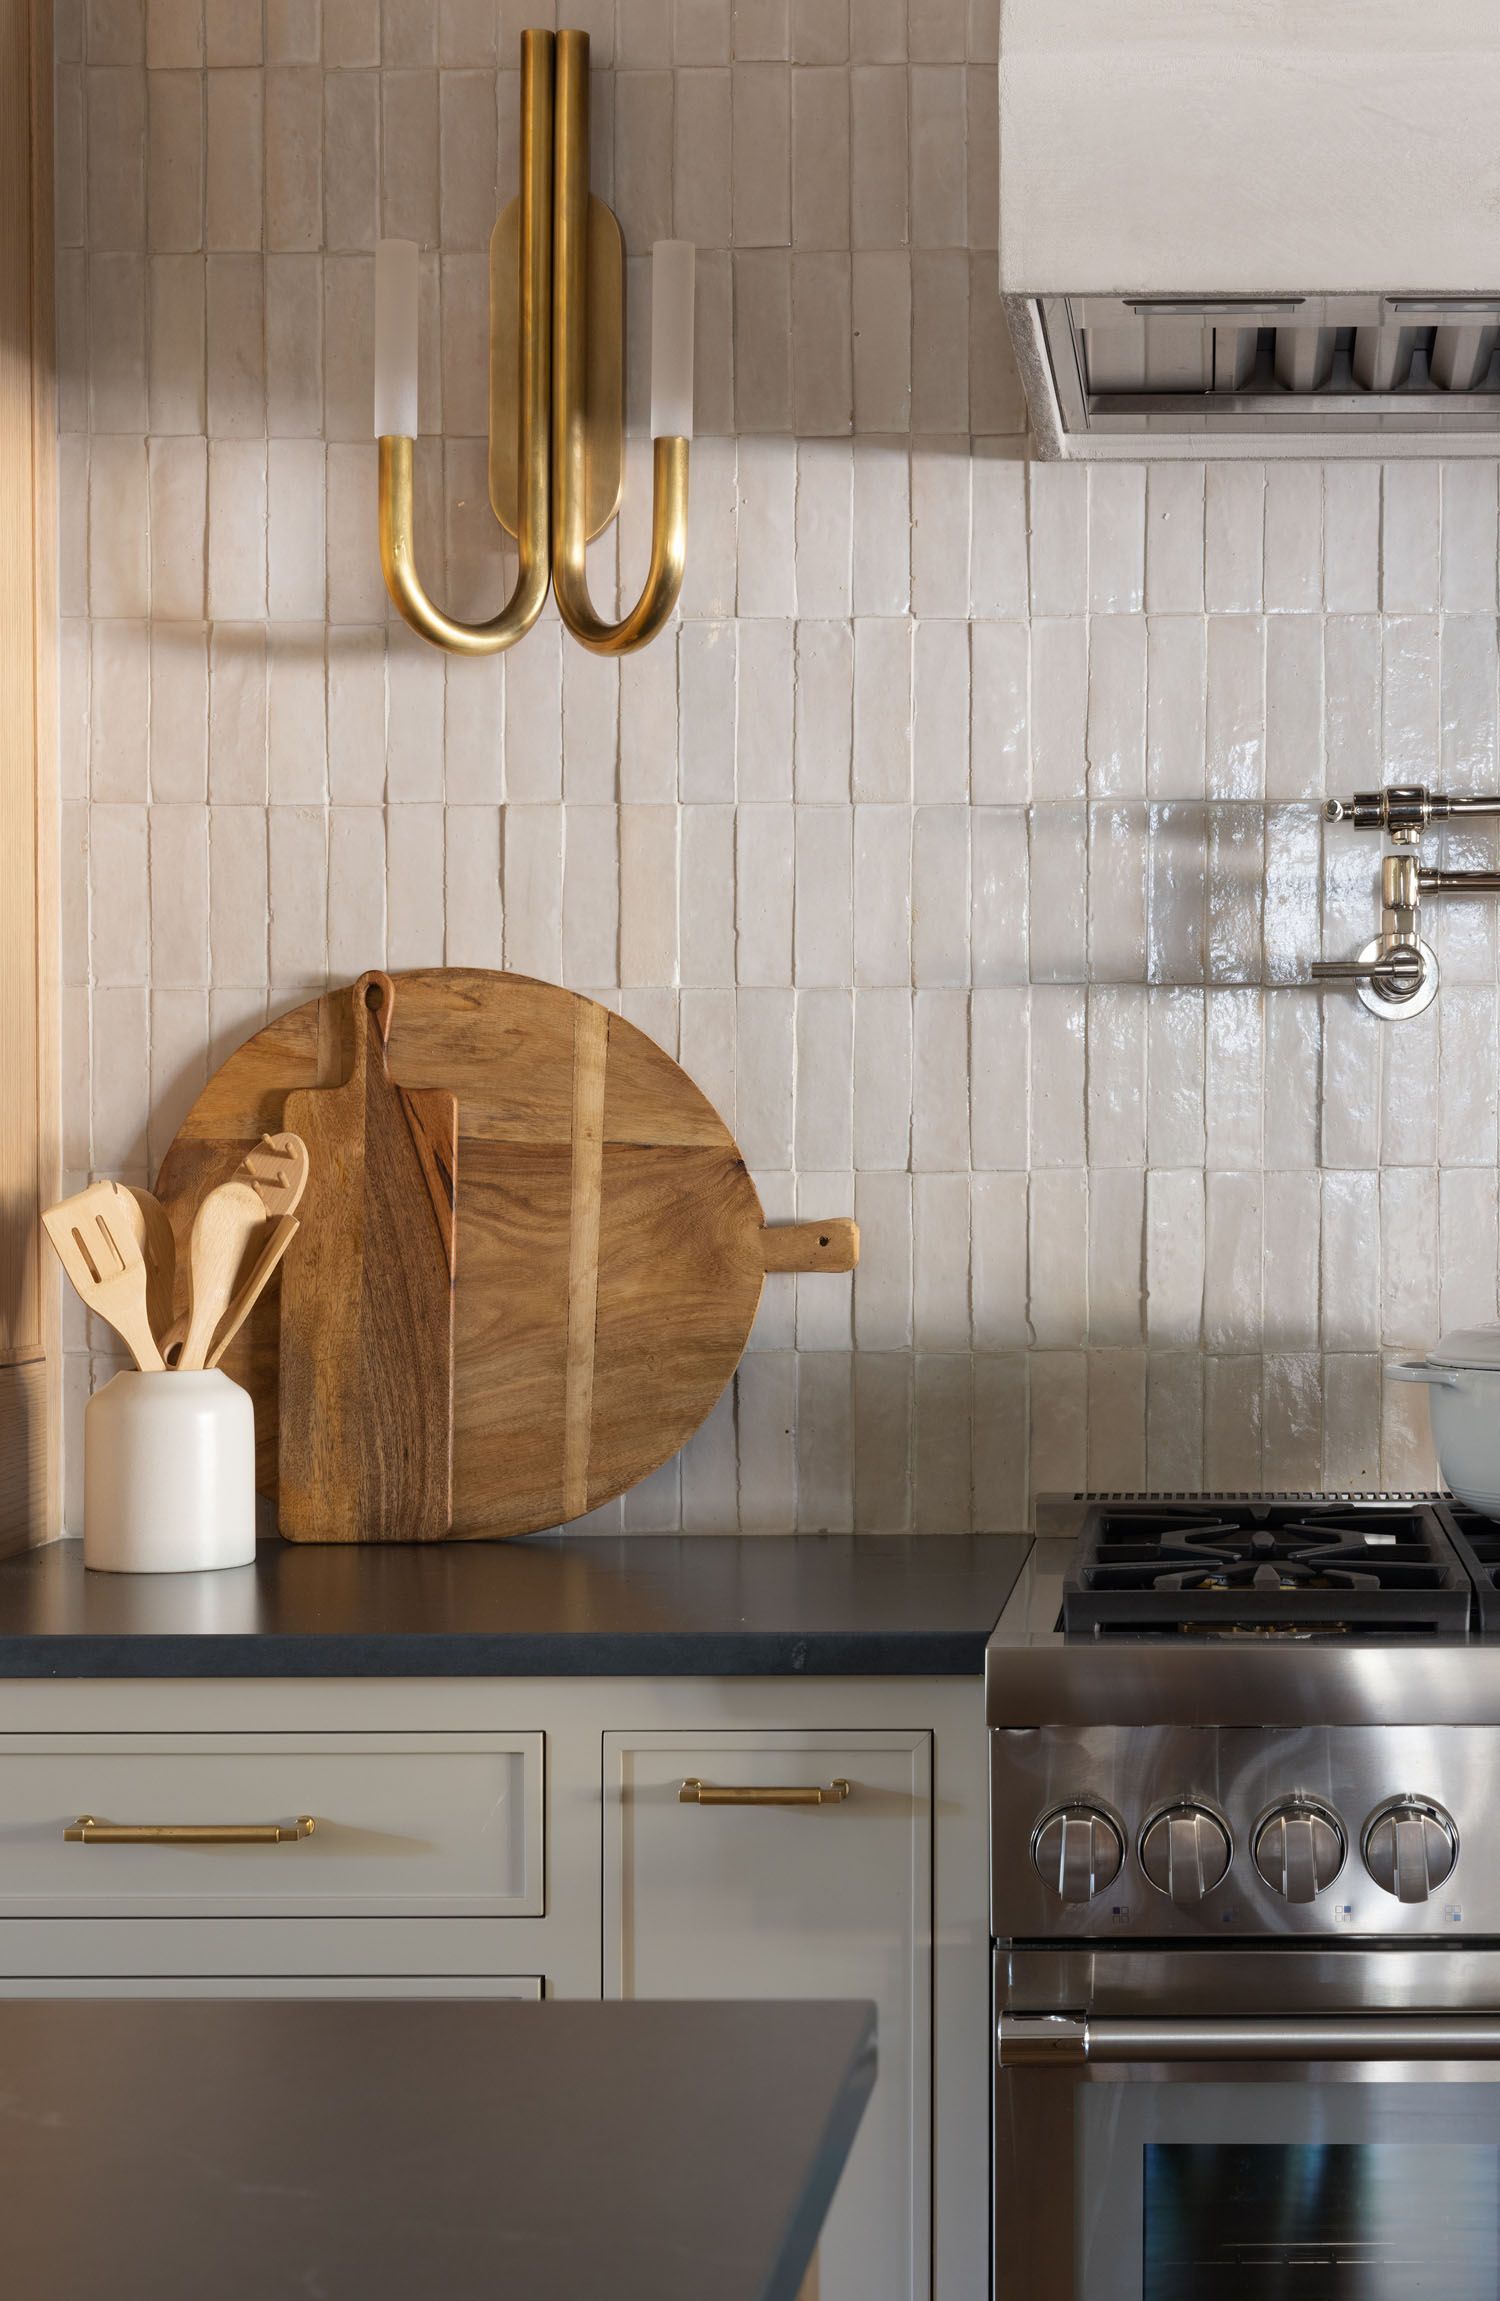 Creative Ideas to Transform Your
Kitchen with a Stunning Backsplash